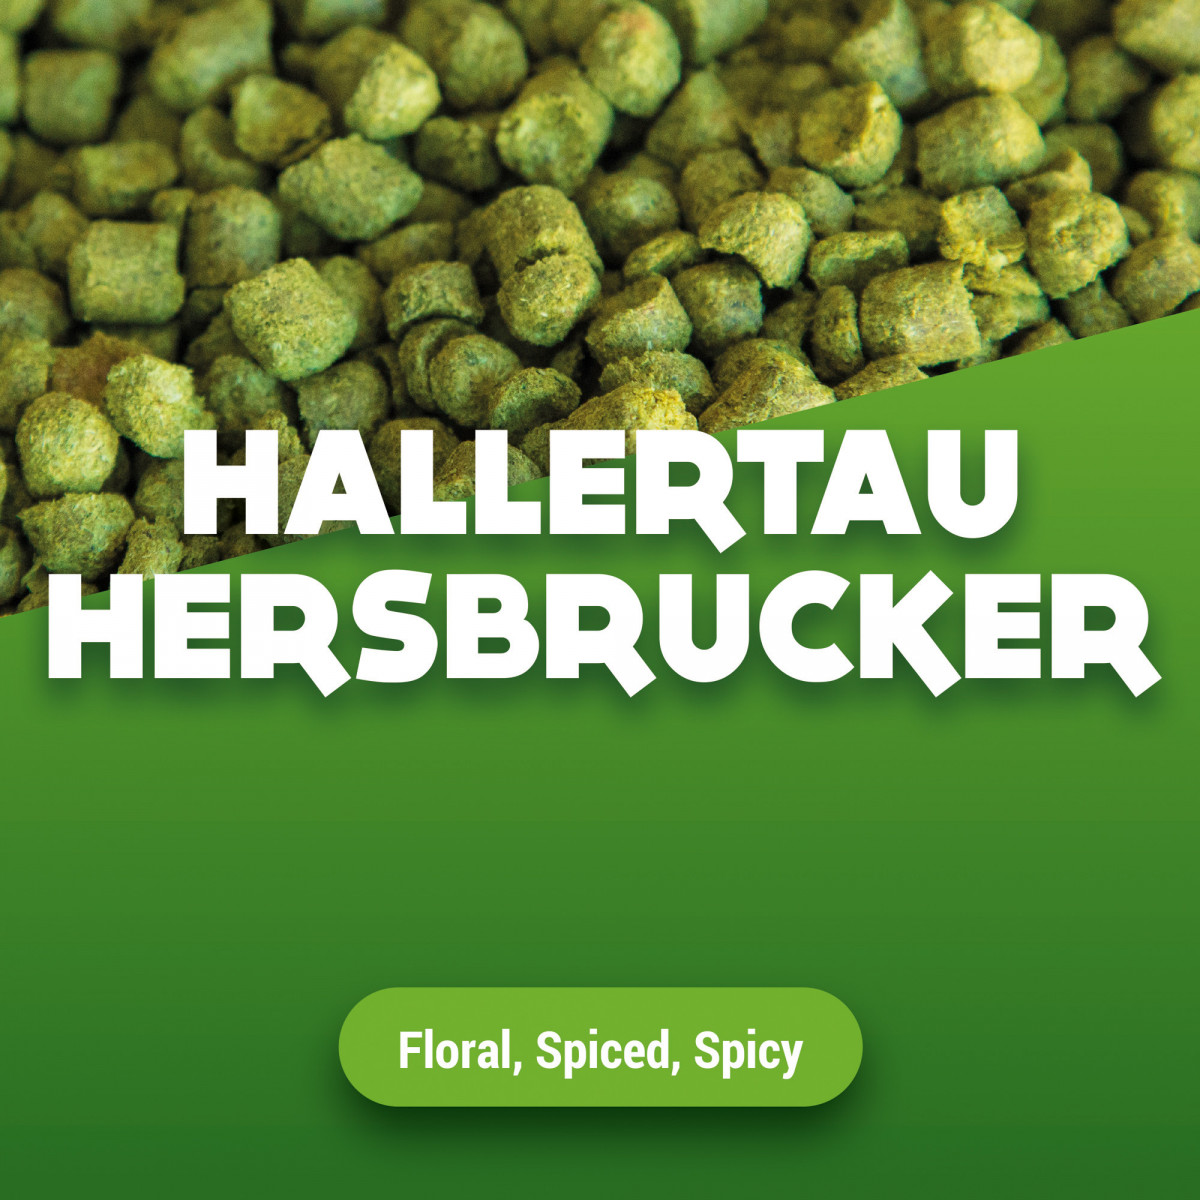 Hopfenpellets Hallertau Hersbrucker 100 g